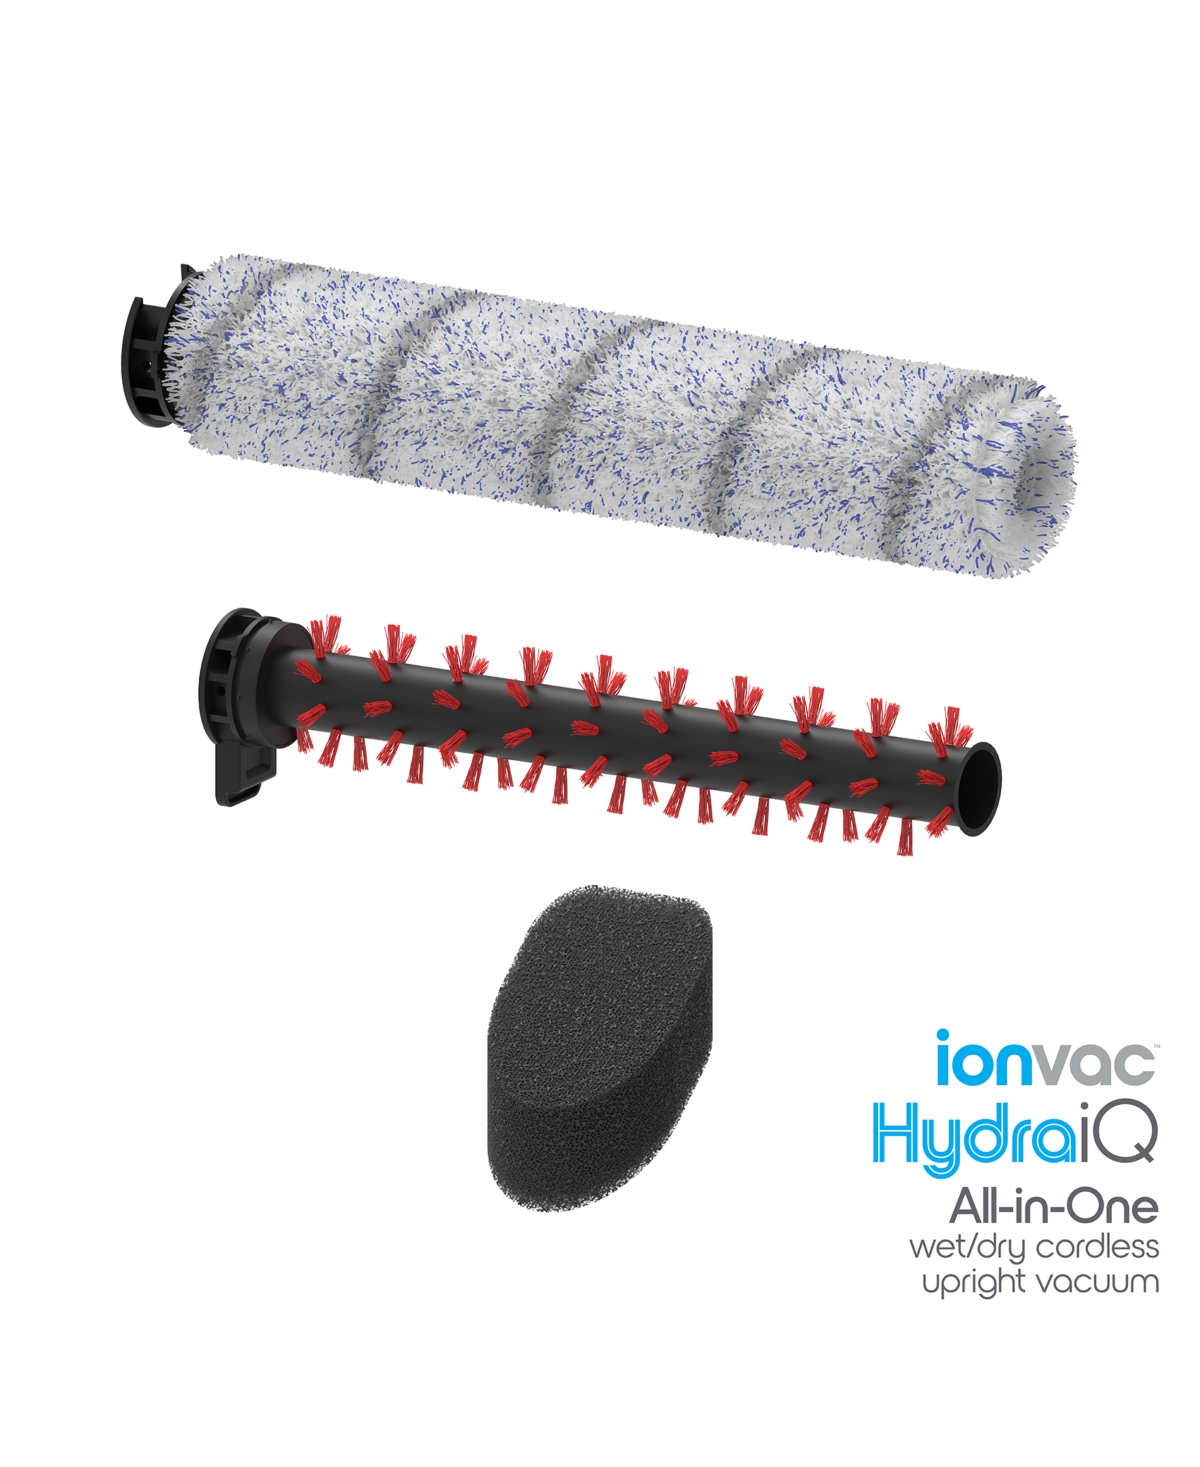 ionvac HydraiQ Vacuum Brush and Filter Replacement Kit